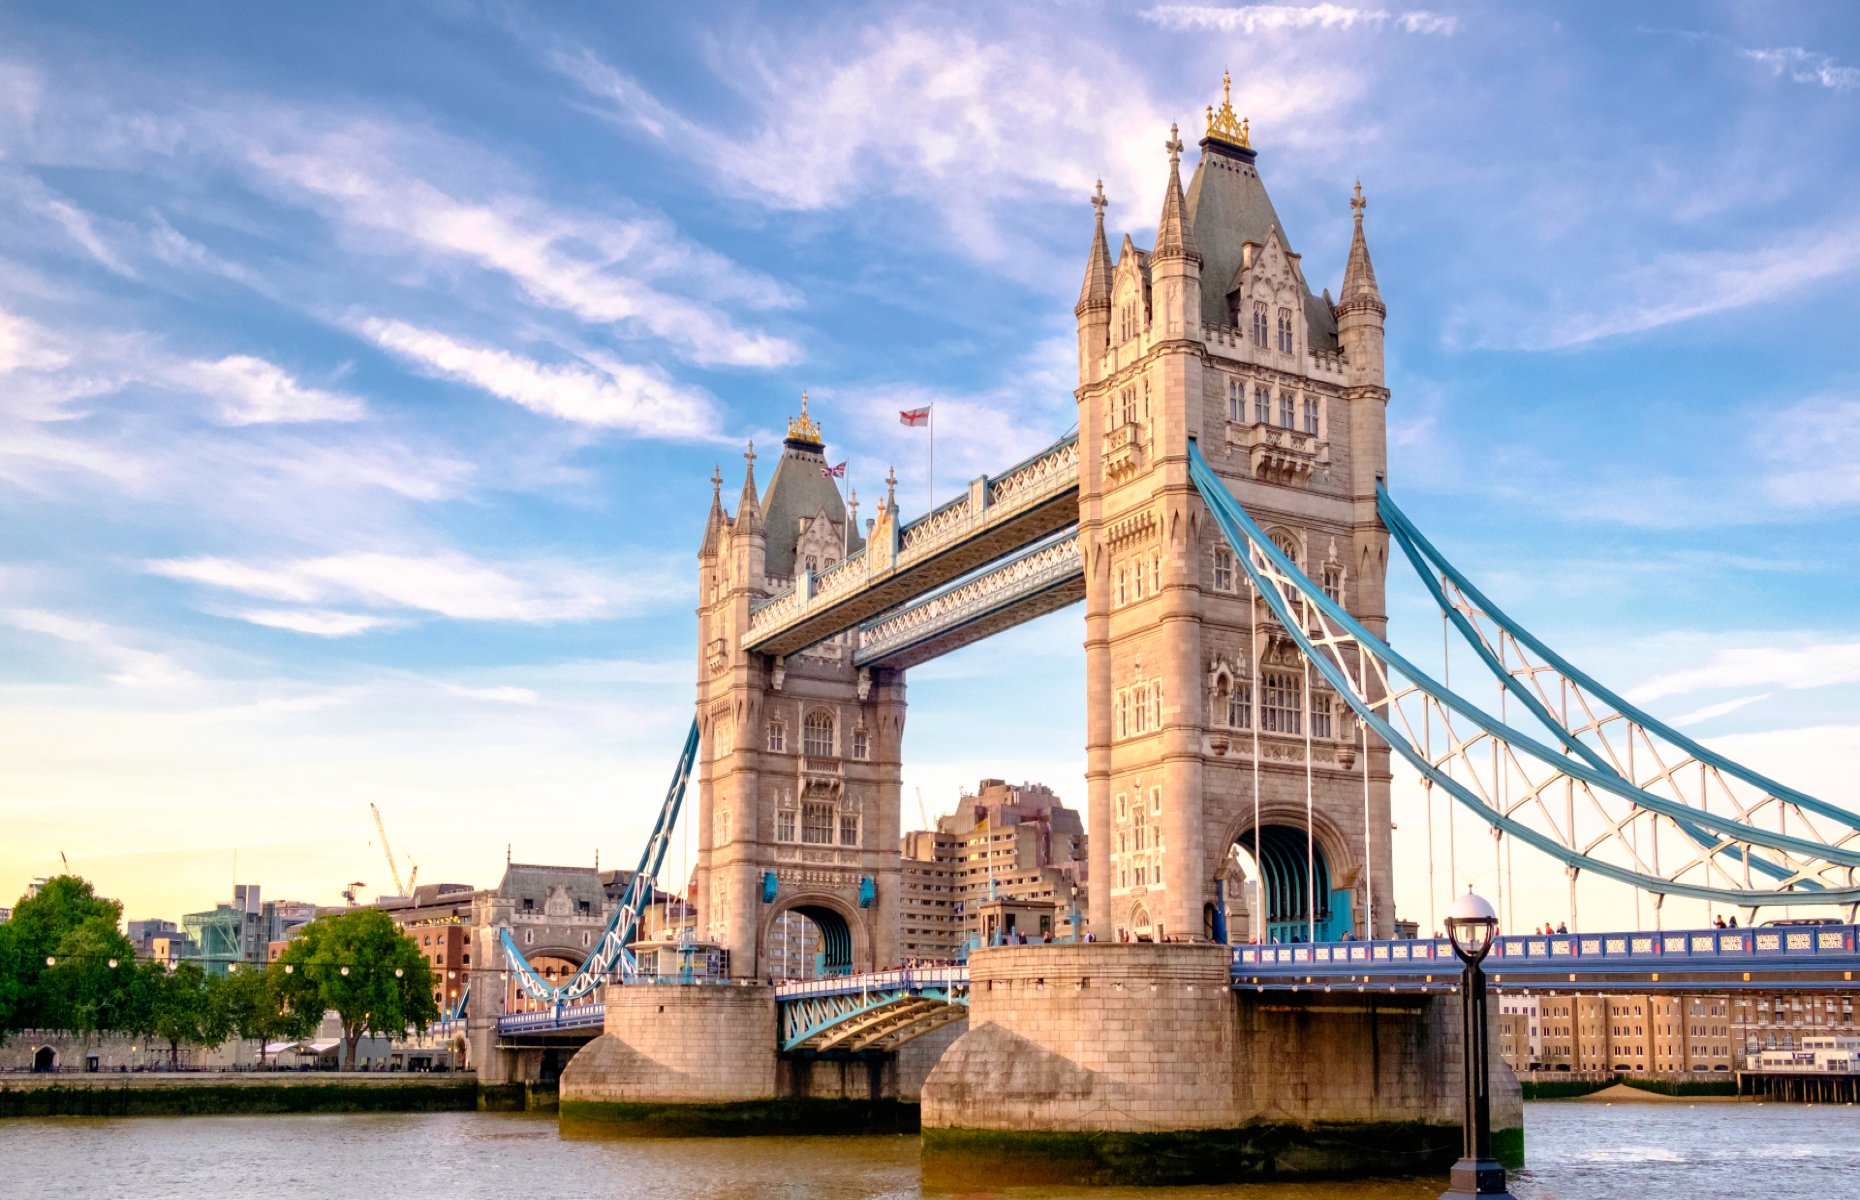 Tower Bridge (Image: alberto cervantes/Shutterstock)